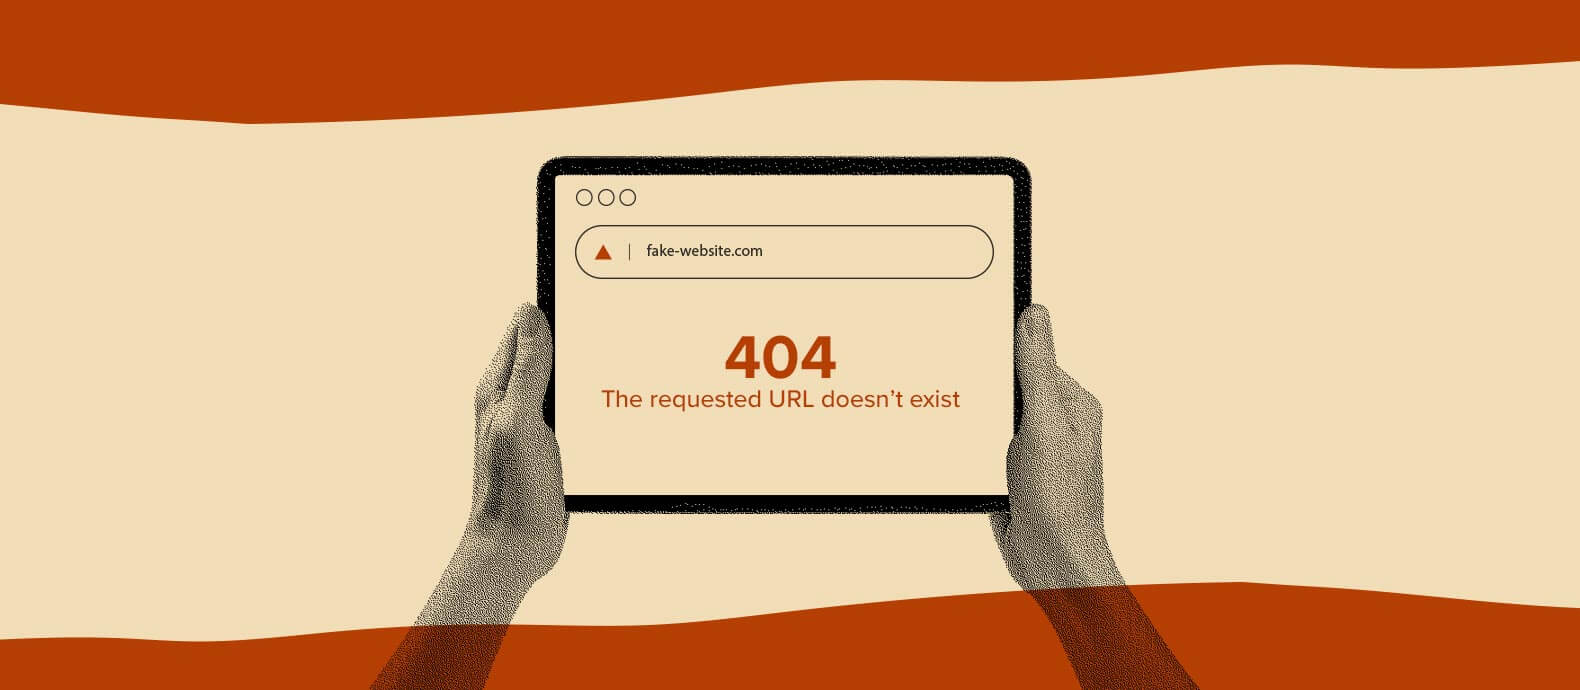 Error 404 » Free hosting, free aliases, no intrusive advertising